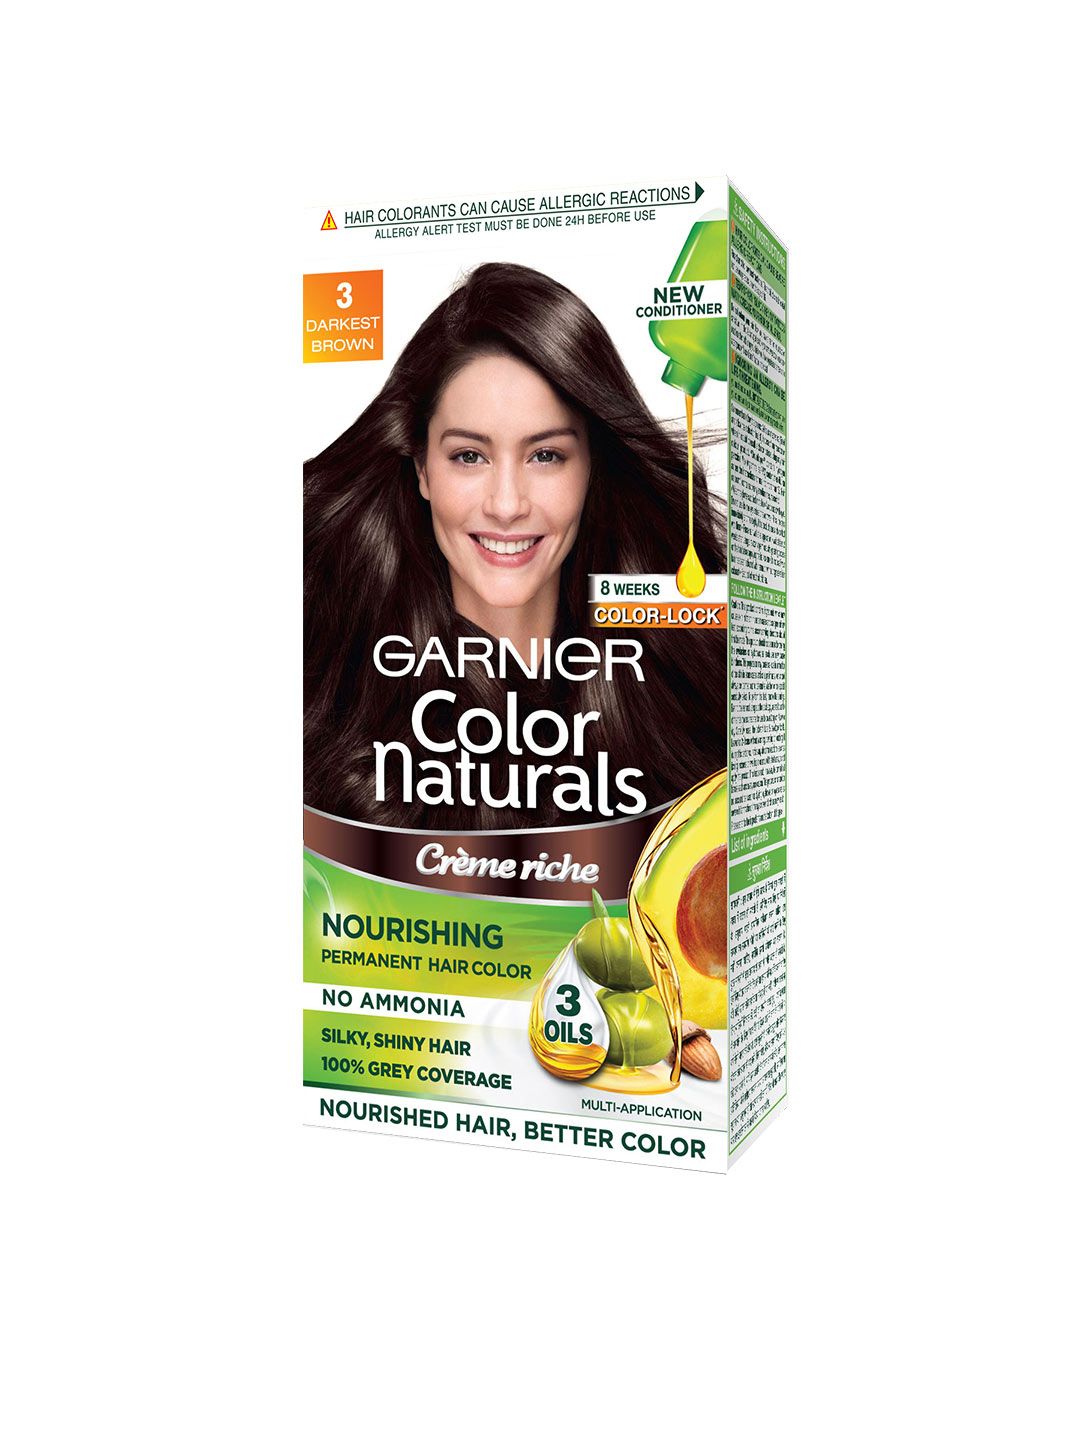 Garnier Color Naturals Creme Hair Color - 3 Darkest Brown 70ml + 60g Price in India